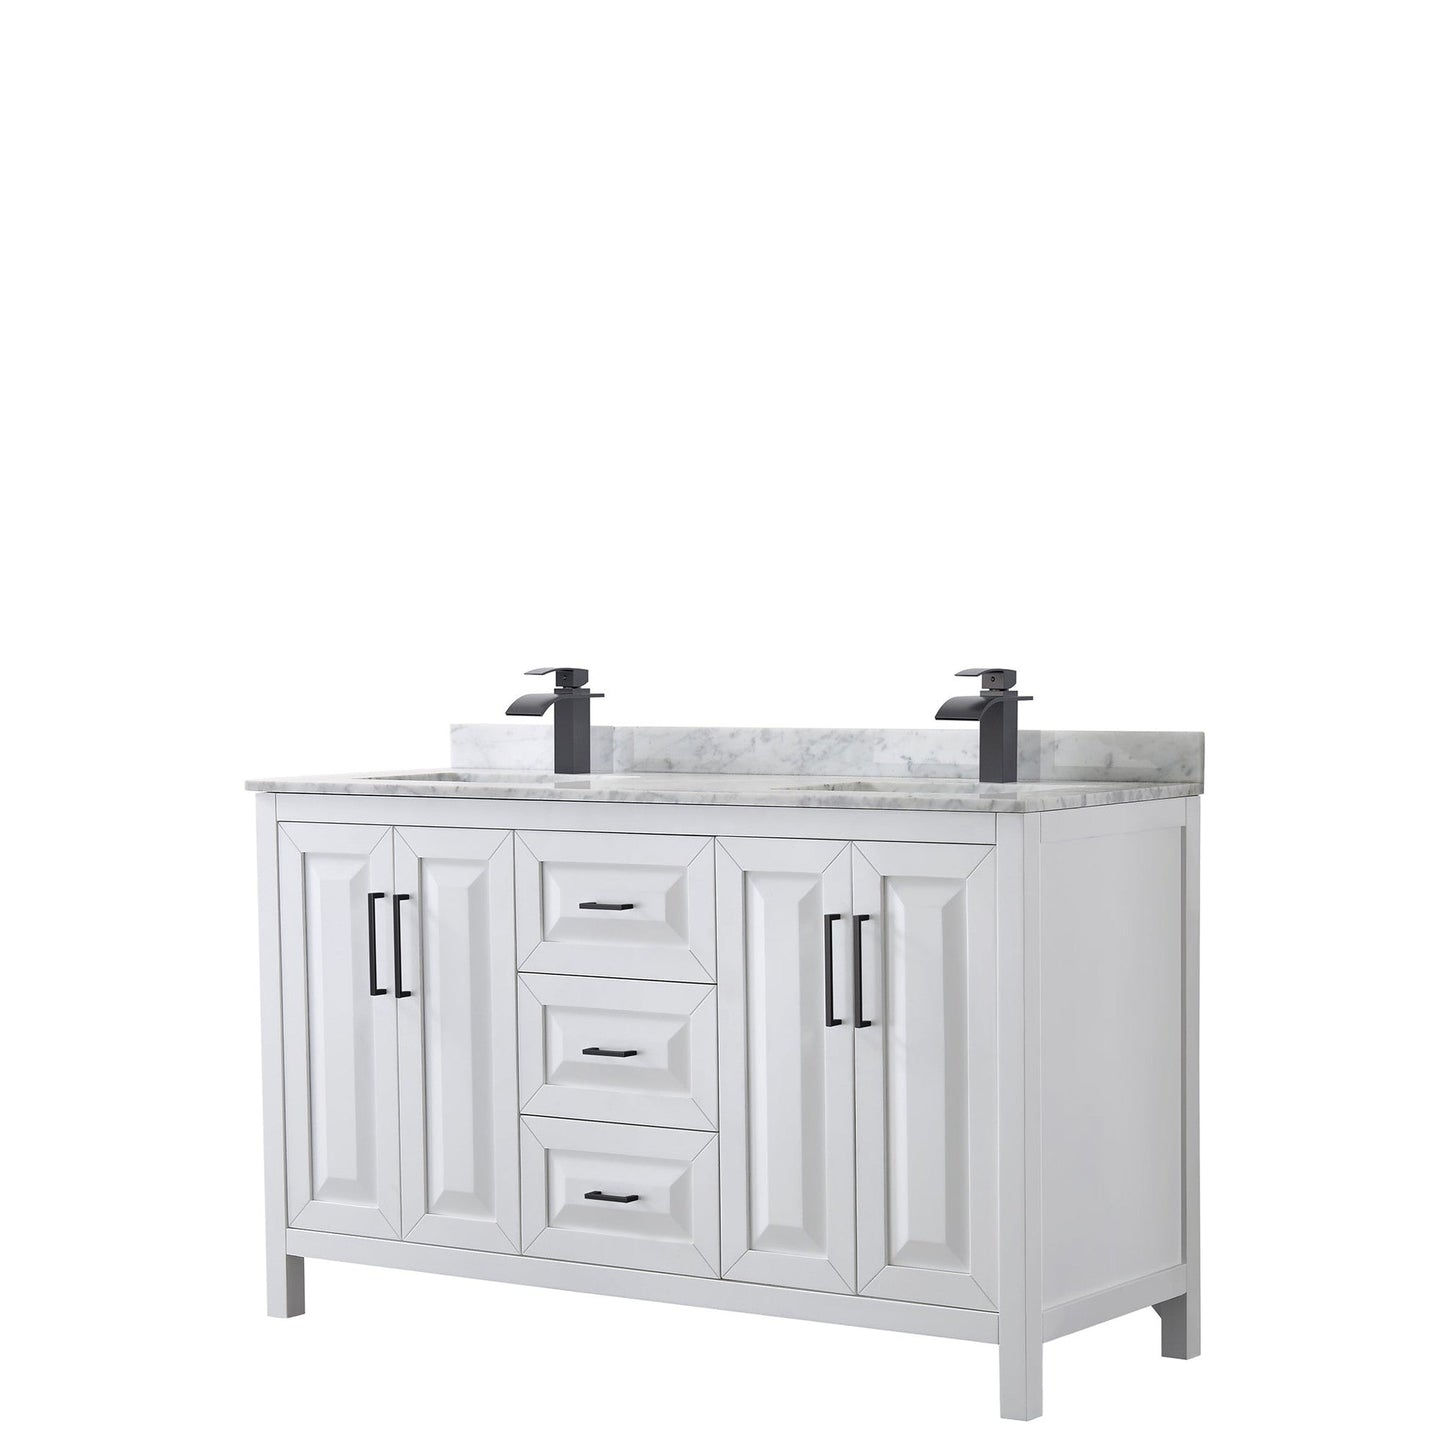 Daria 60" Double Bathroom Vanity in White, White Carrara Marble Countertop, Undermount Square Sinks, Matte Black Trim